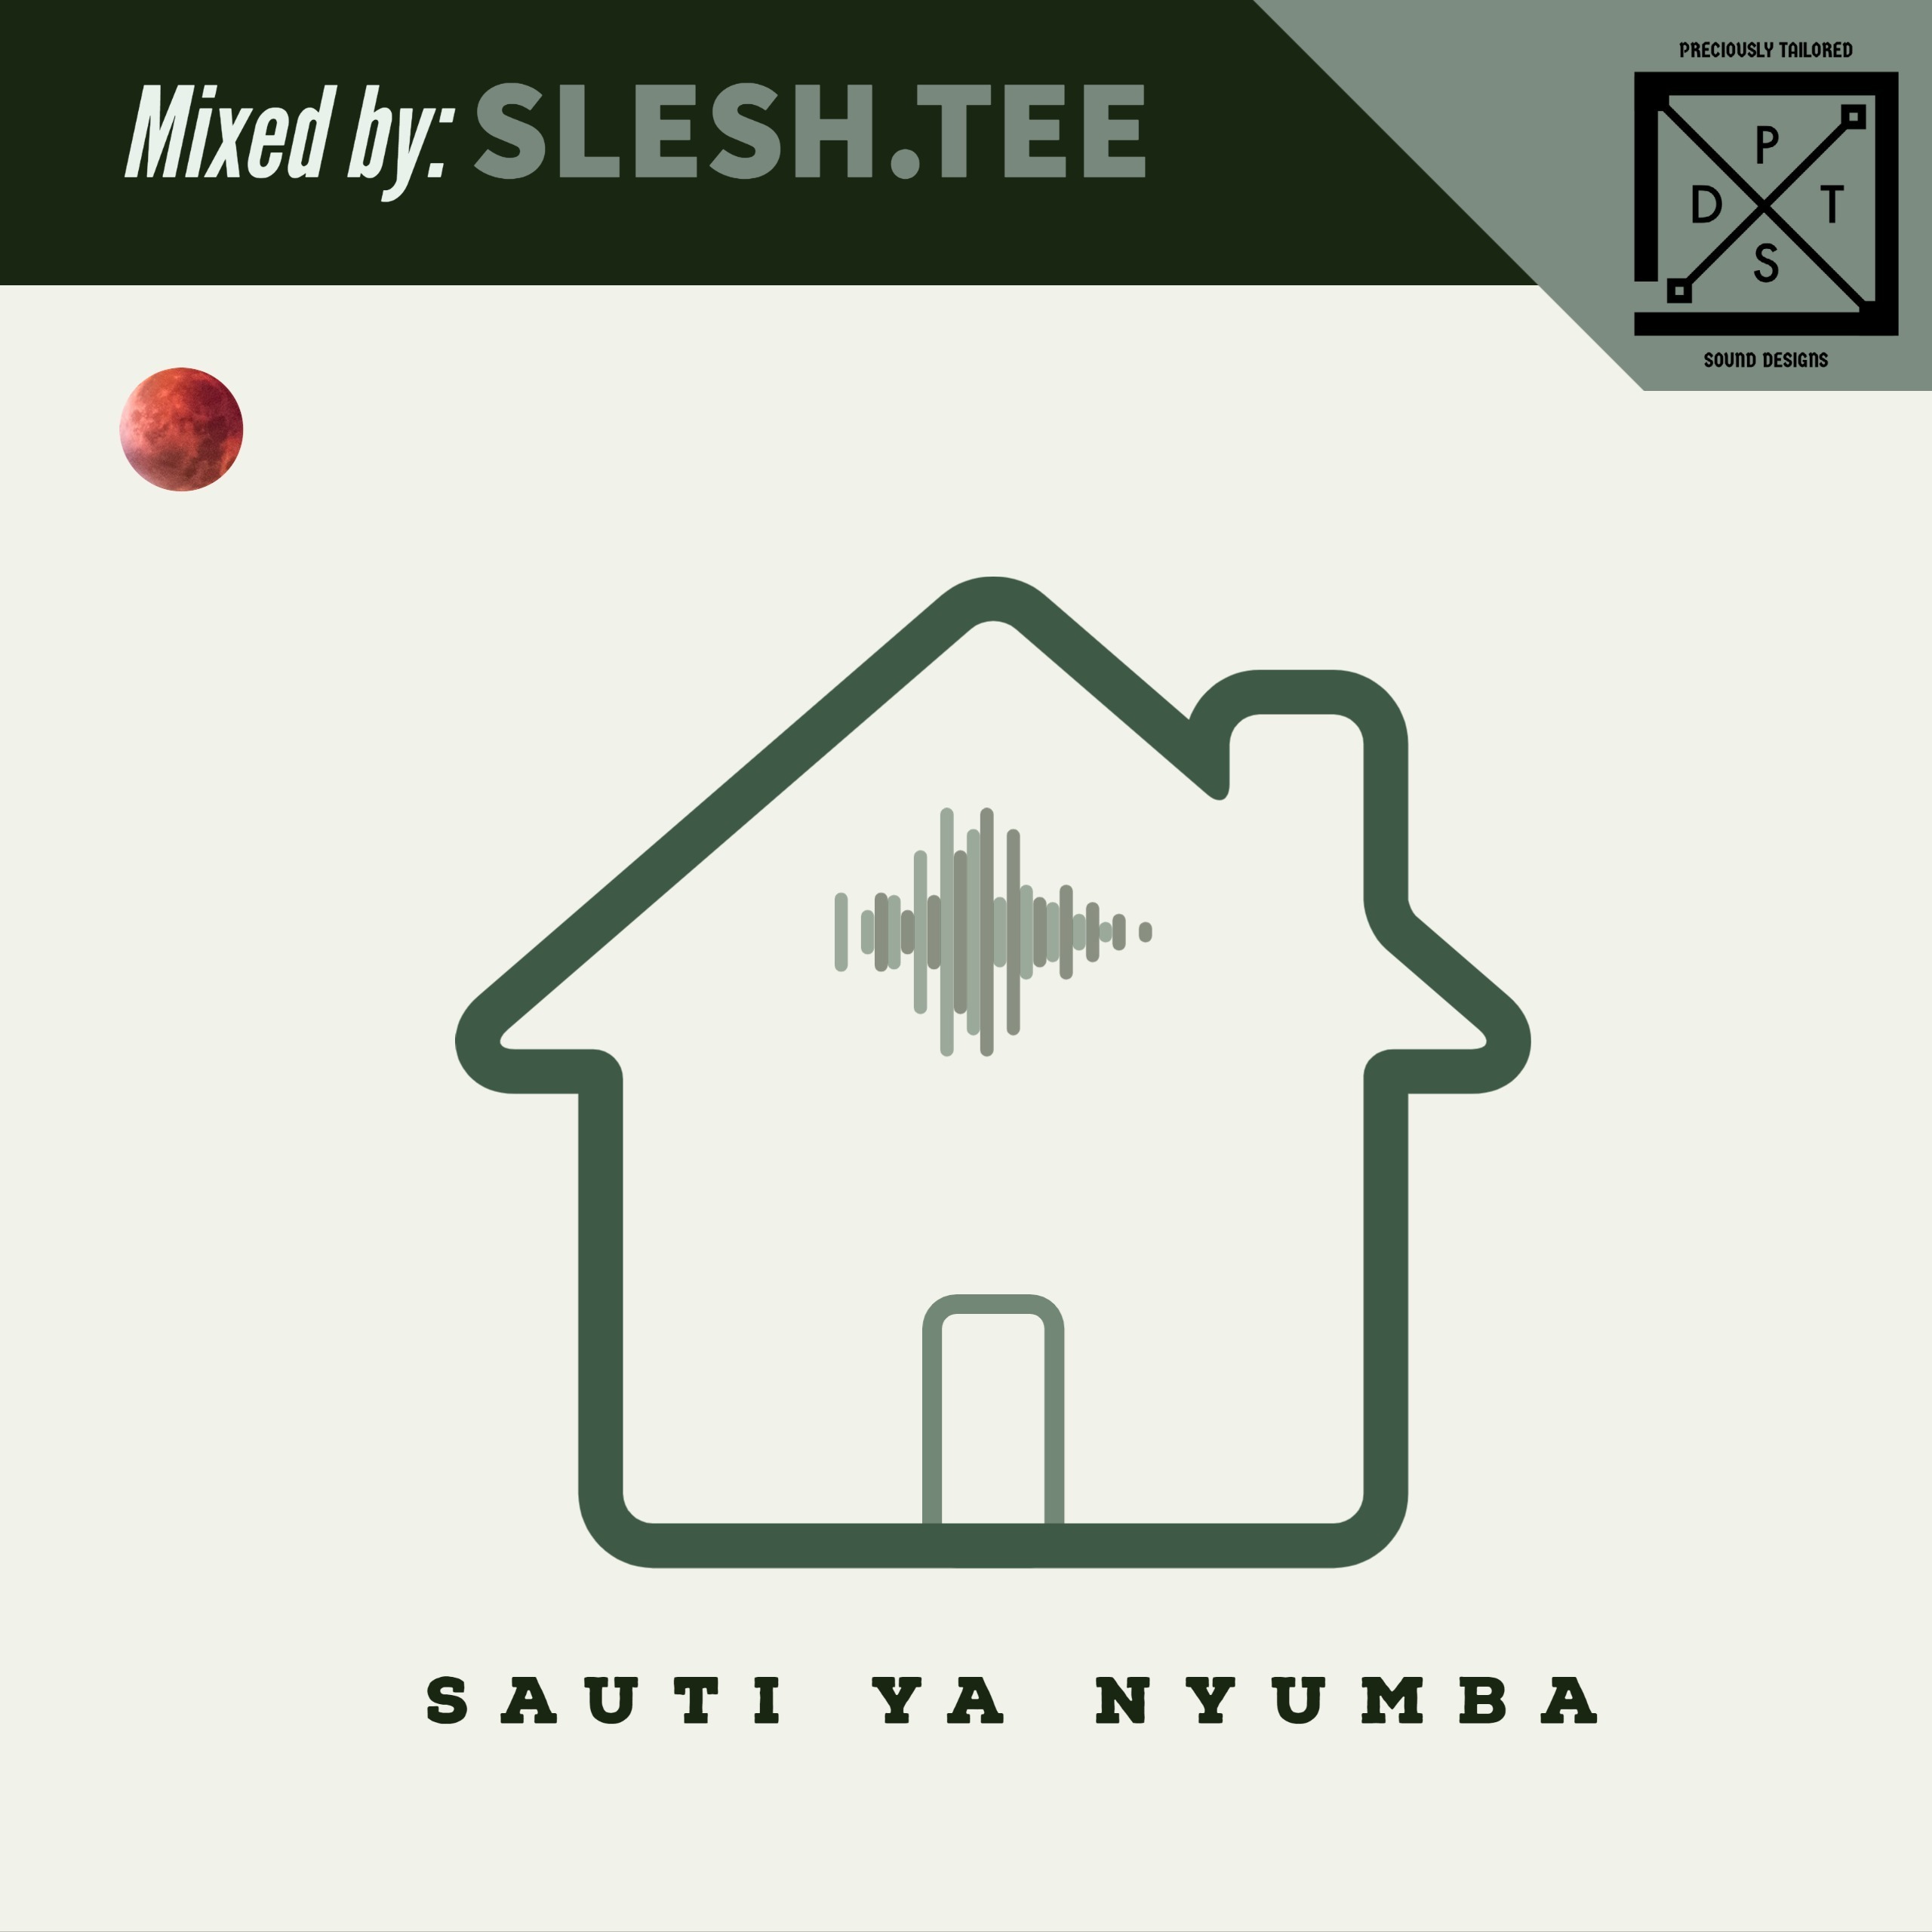 Episode 29: SAUTI YA NYUMBA Vol.29 curated by Slesh.Tee